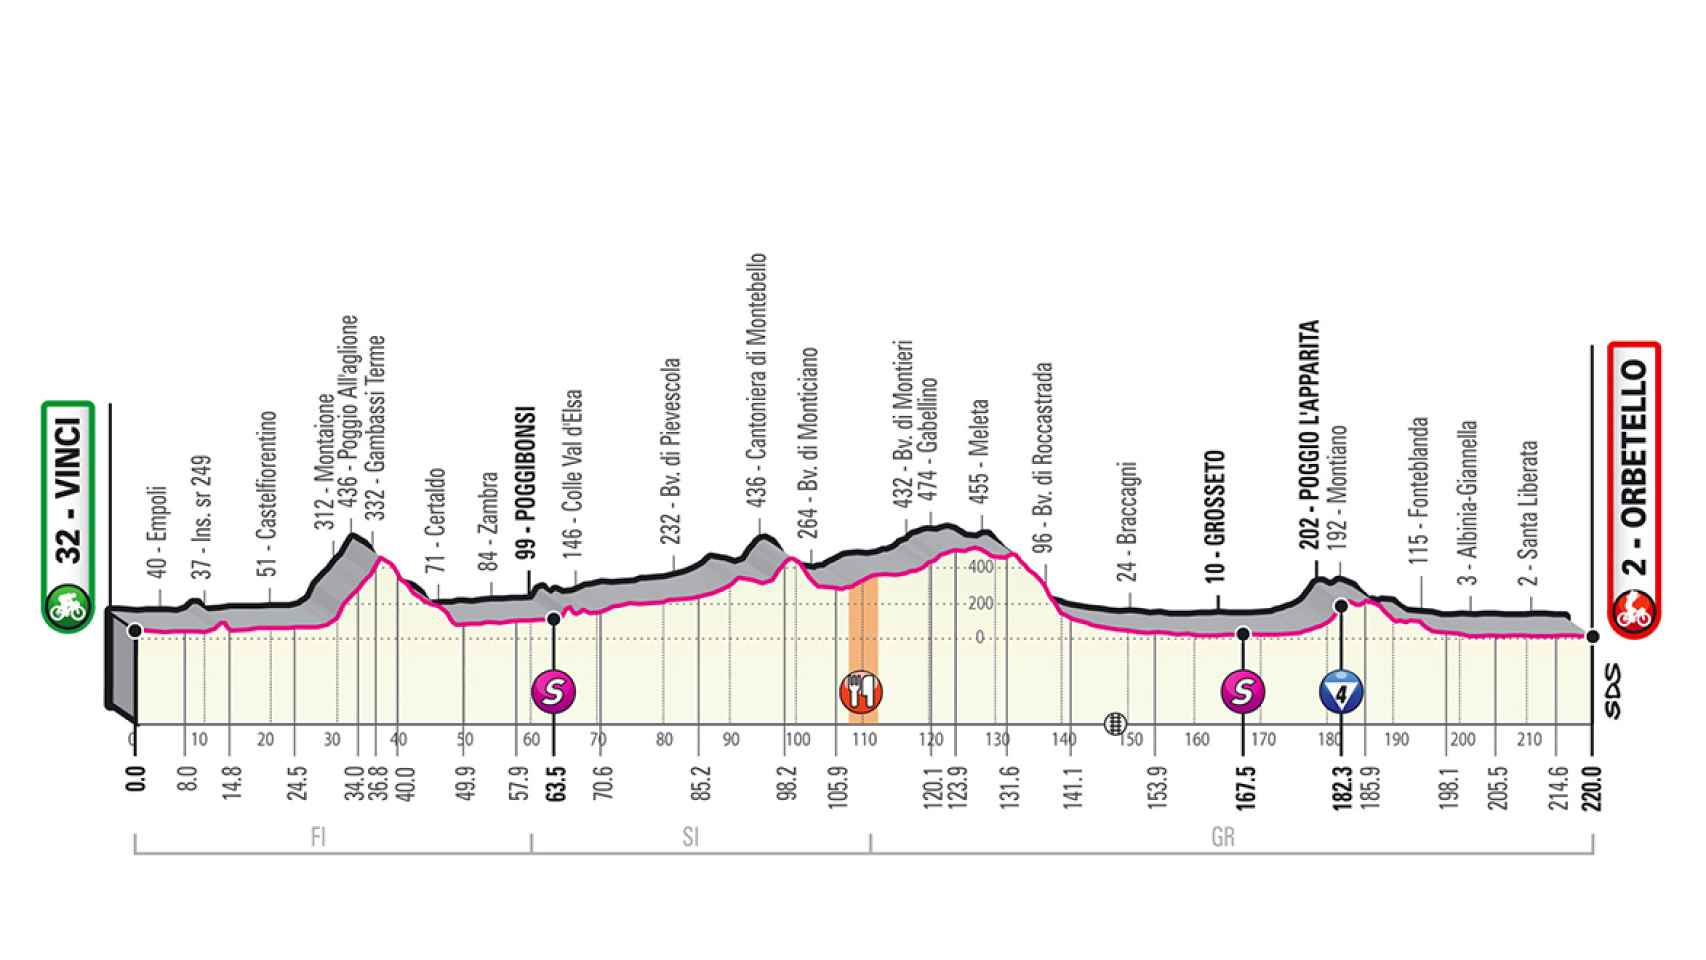 Asi Seran Las 21 Etapas Del Giro De Italia 2019 Recorrido Y Perfiles